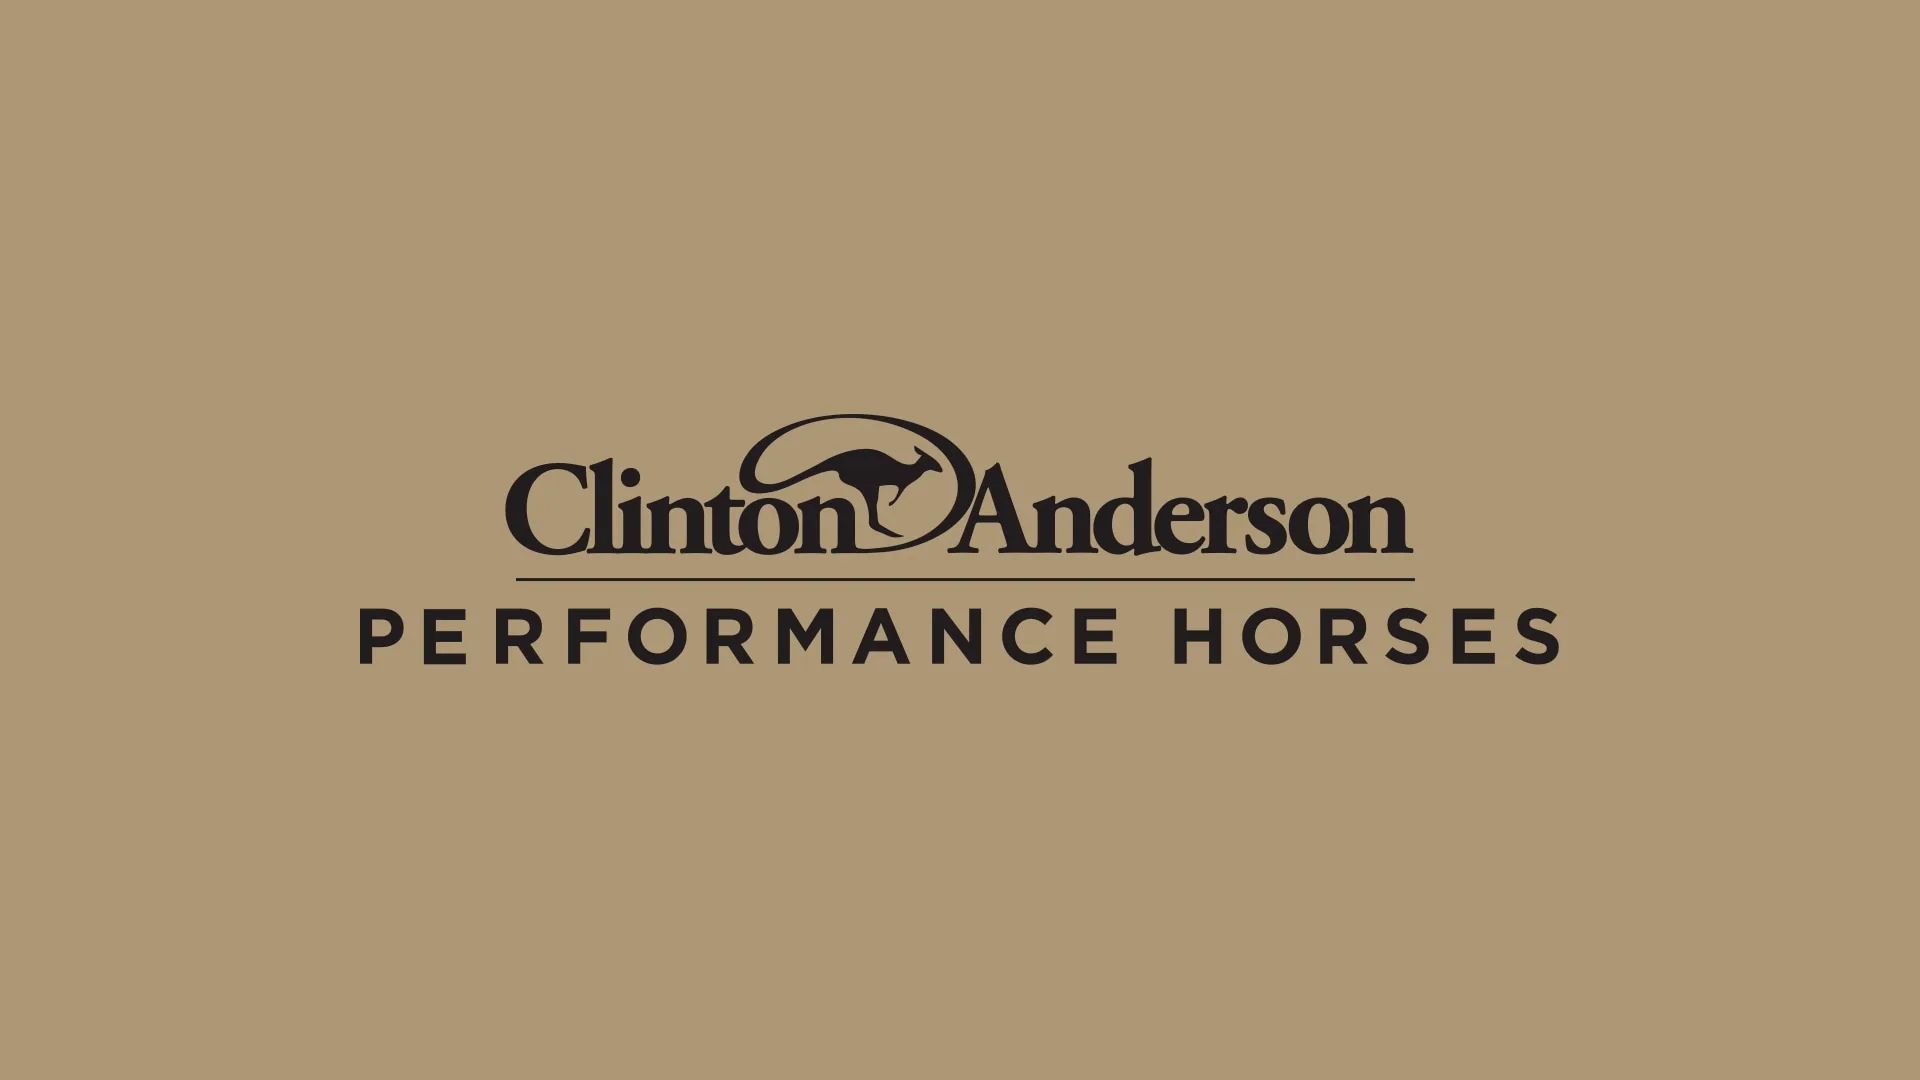 Clinton Anderson performance horses - logo design, branding